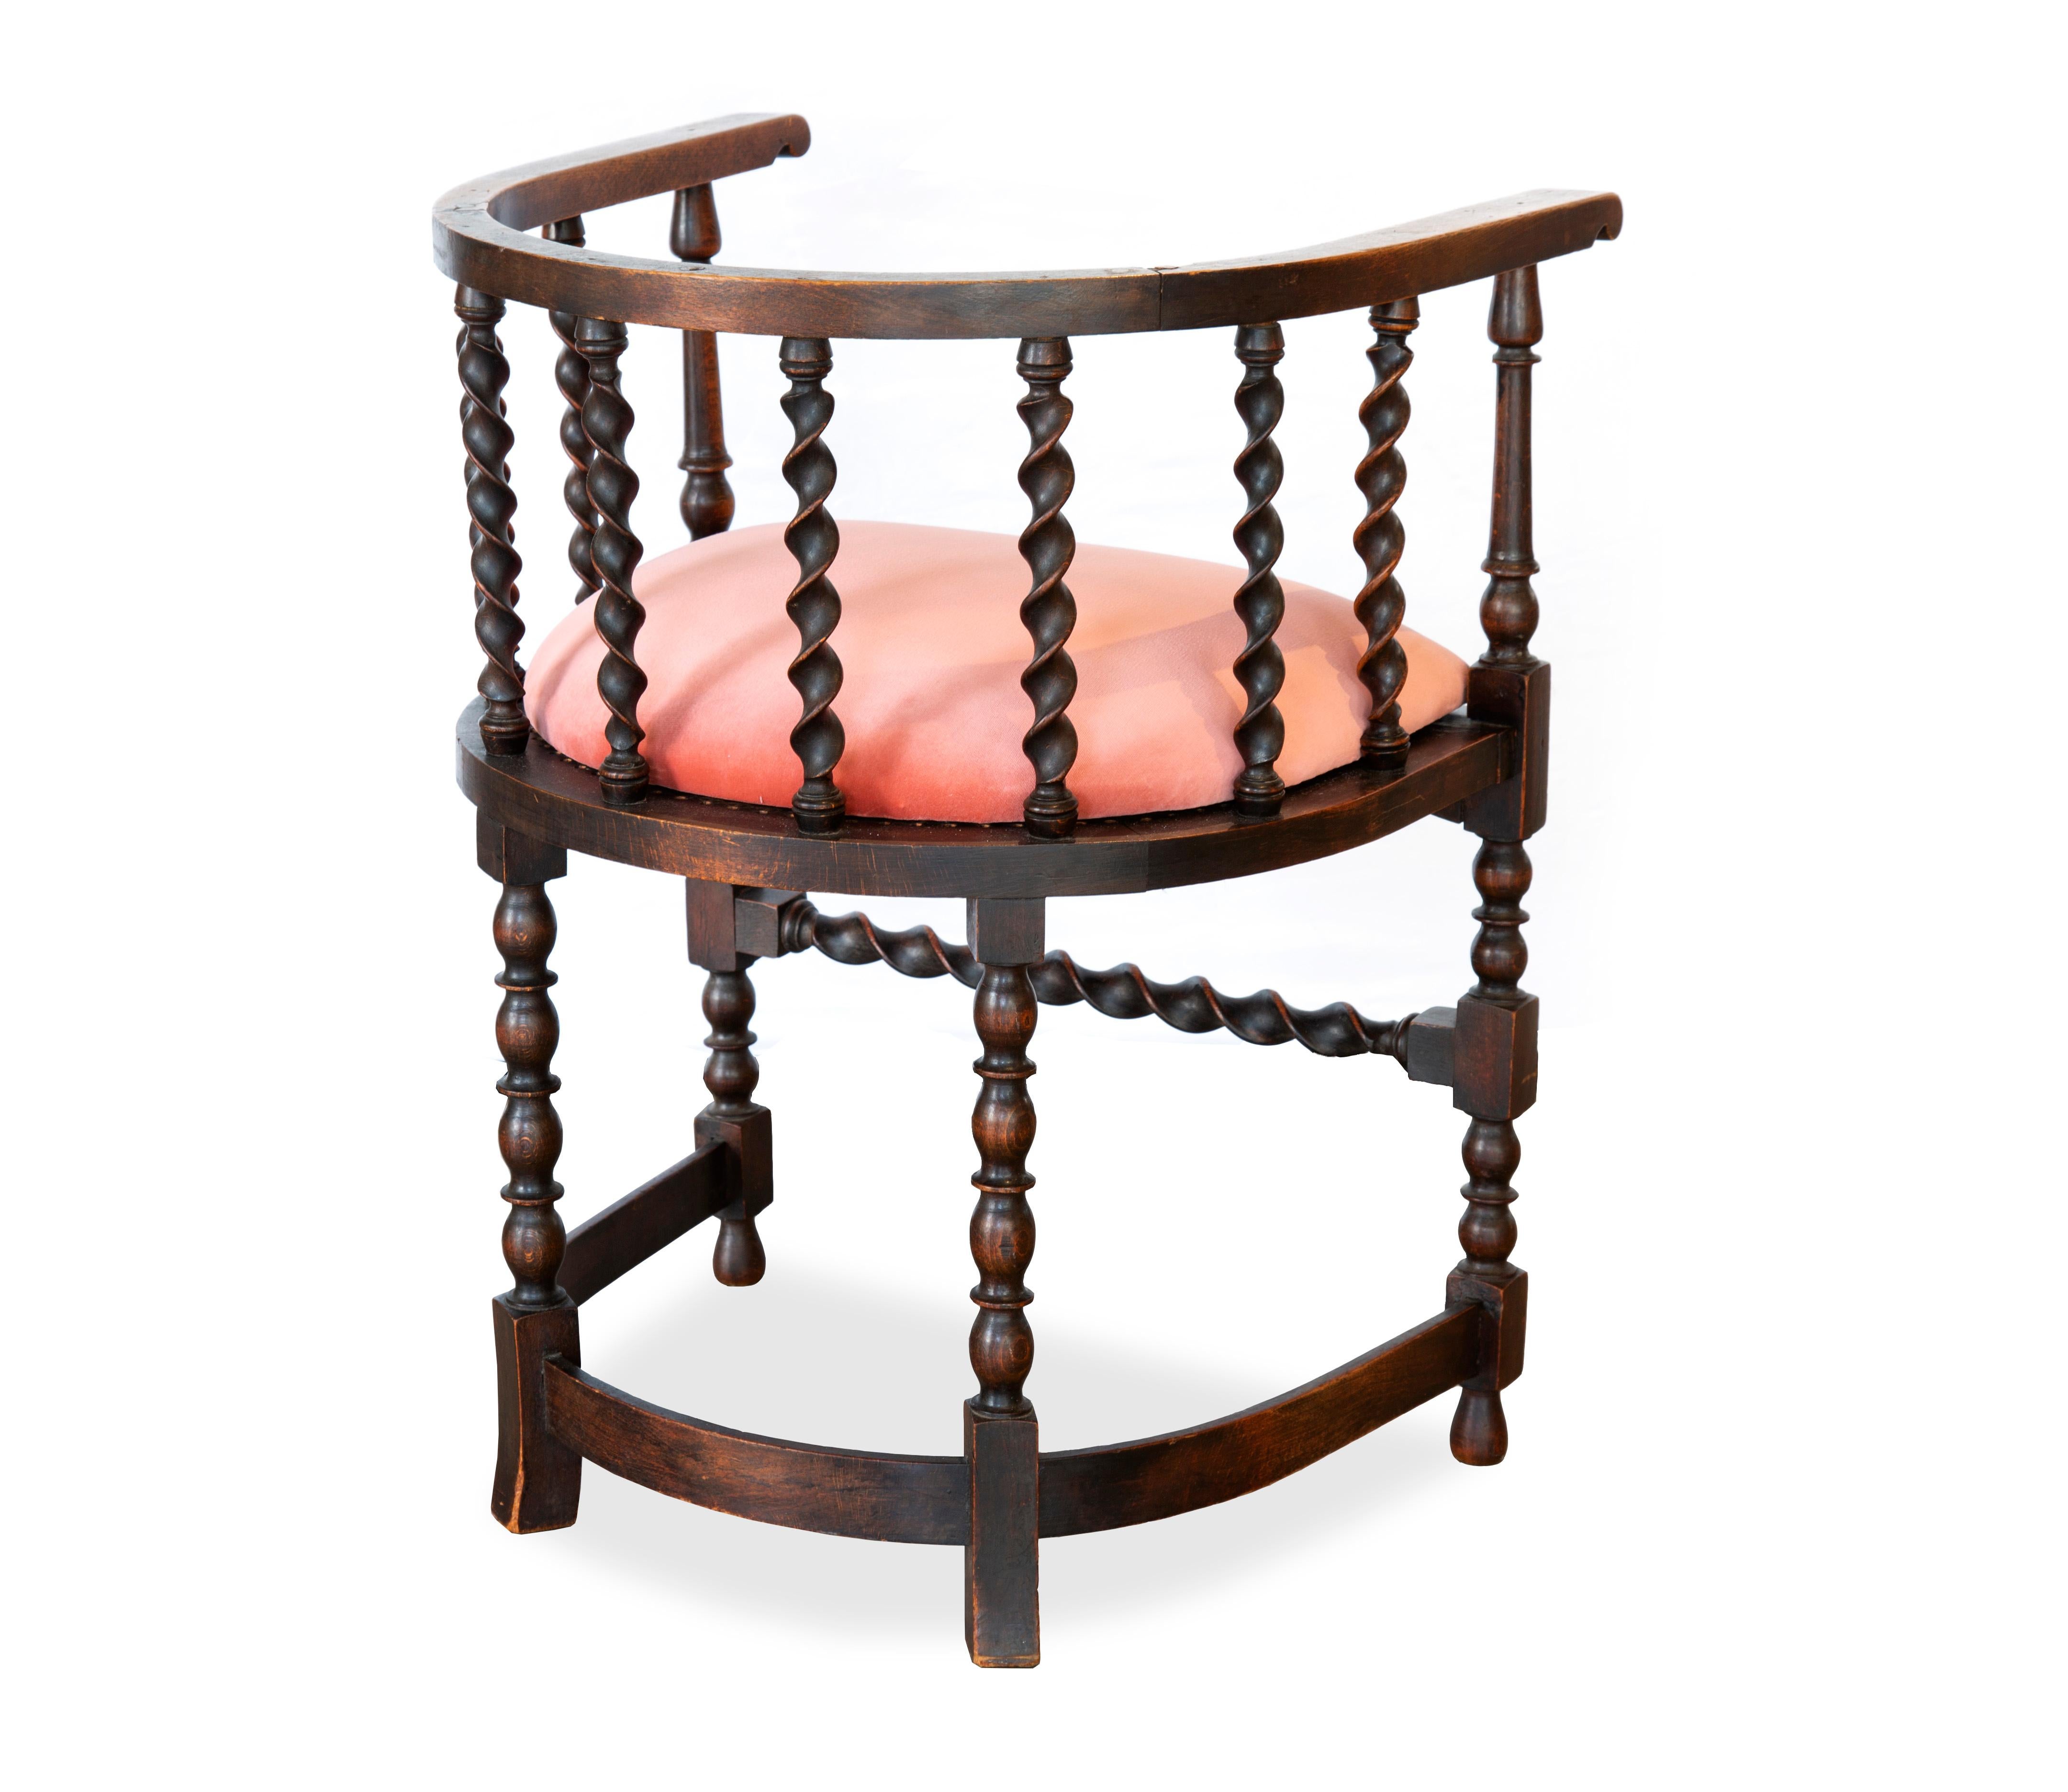 Vintage barley twist oak chair recently upholstered in coral cotton velvet.